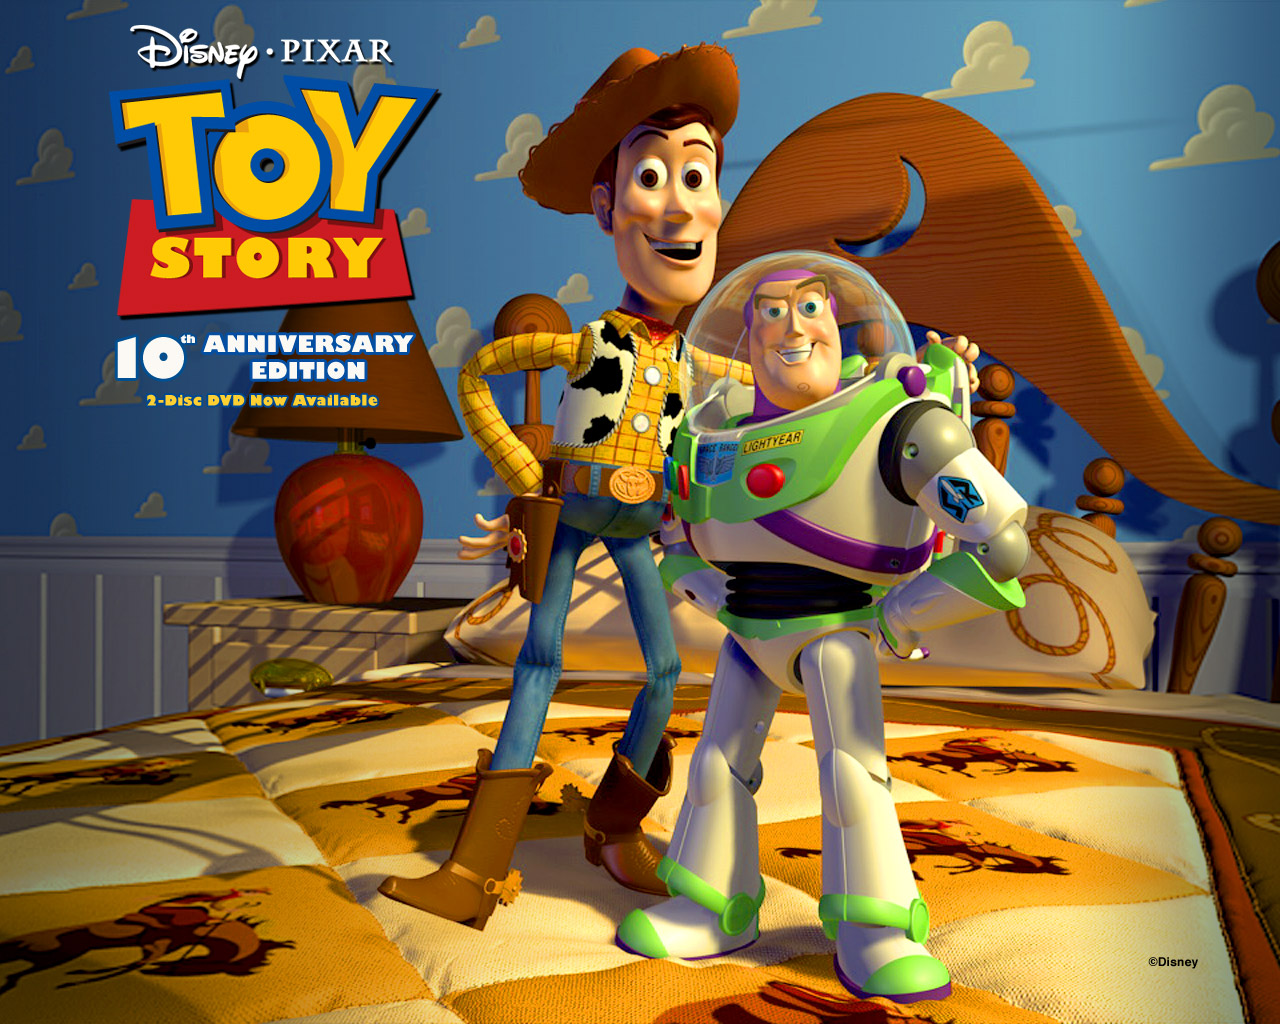 Previous, Cartoons - Toy Story Pixar wallpaper